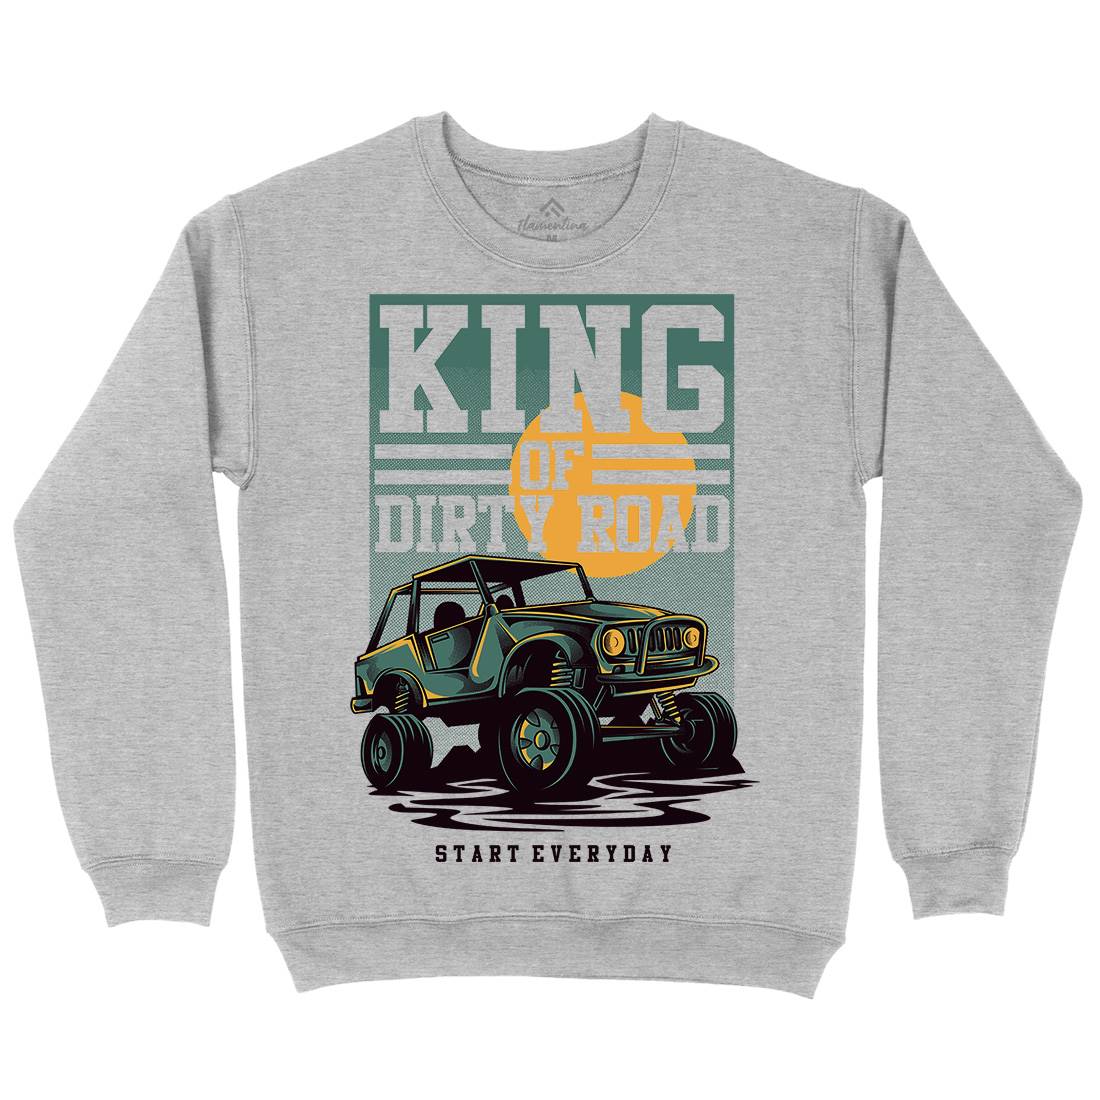 King Of Dirty Road Kids Crew Neck Sweatshirt Cars D631